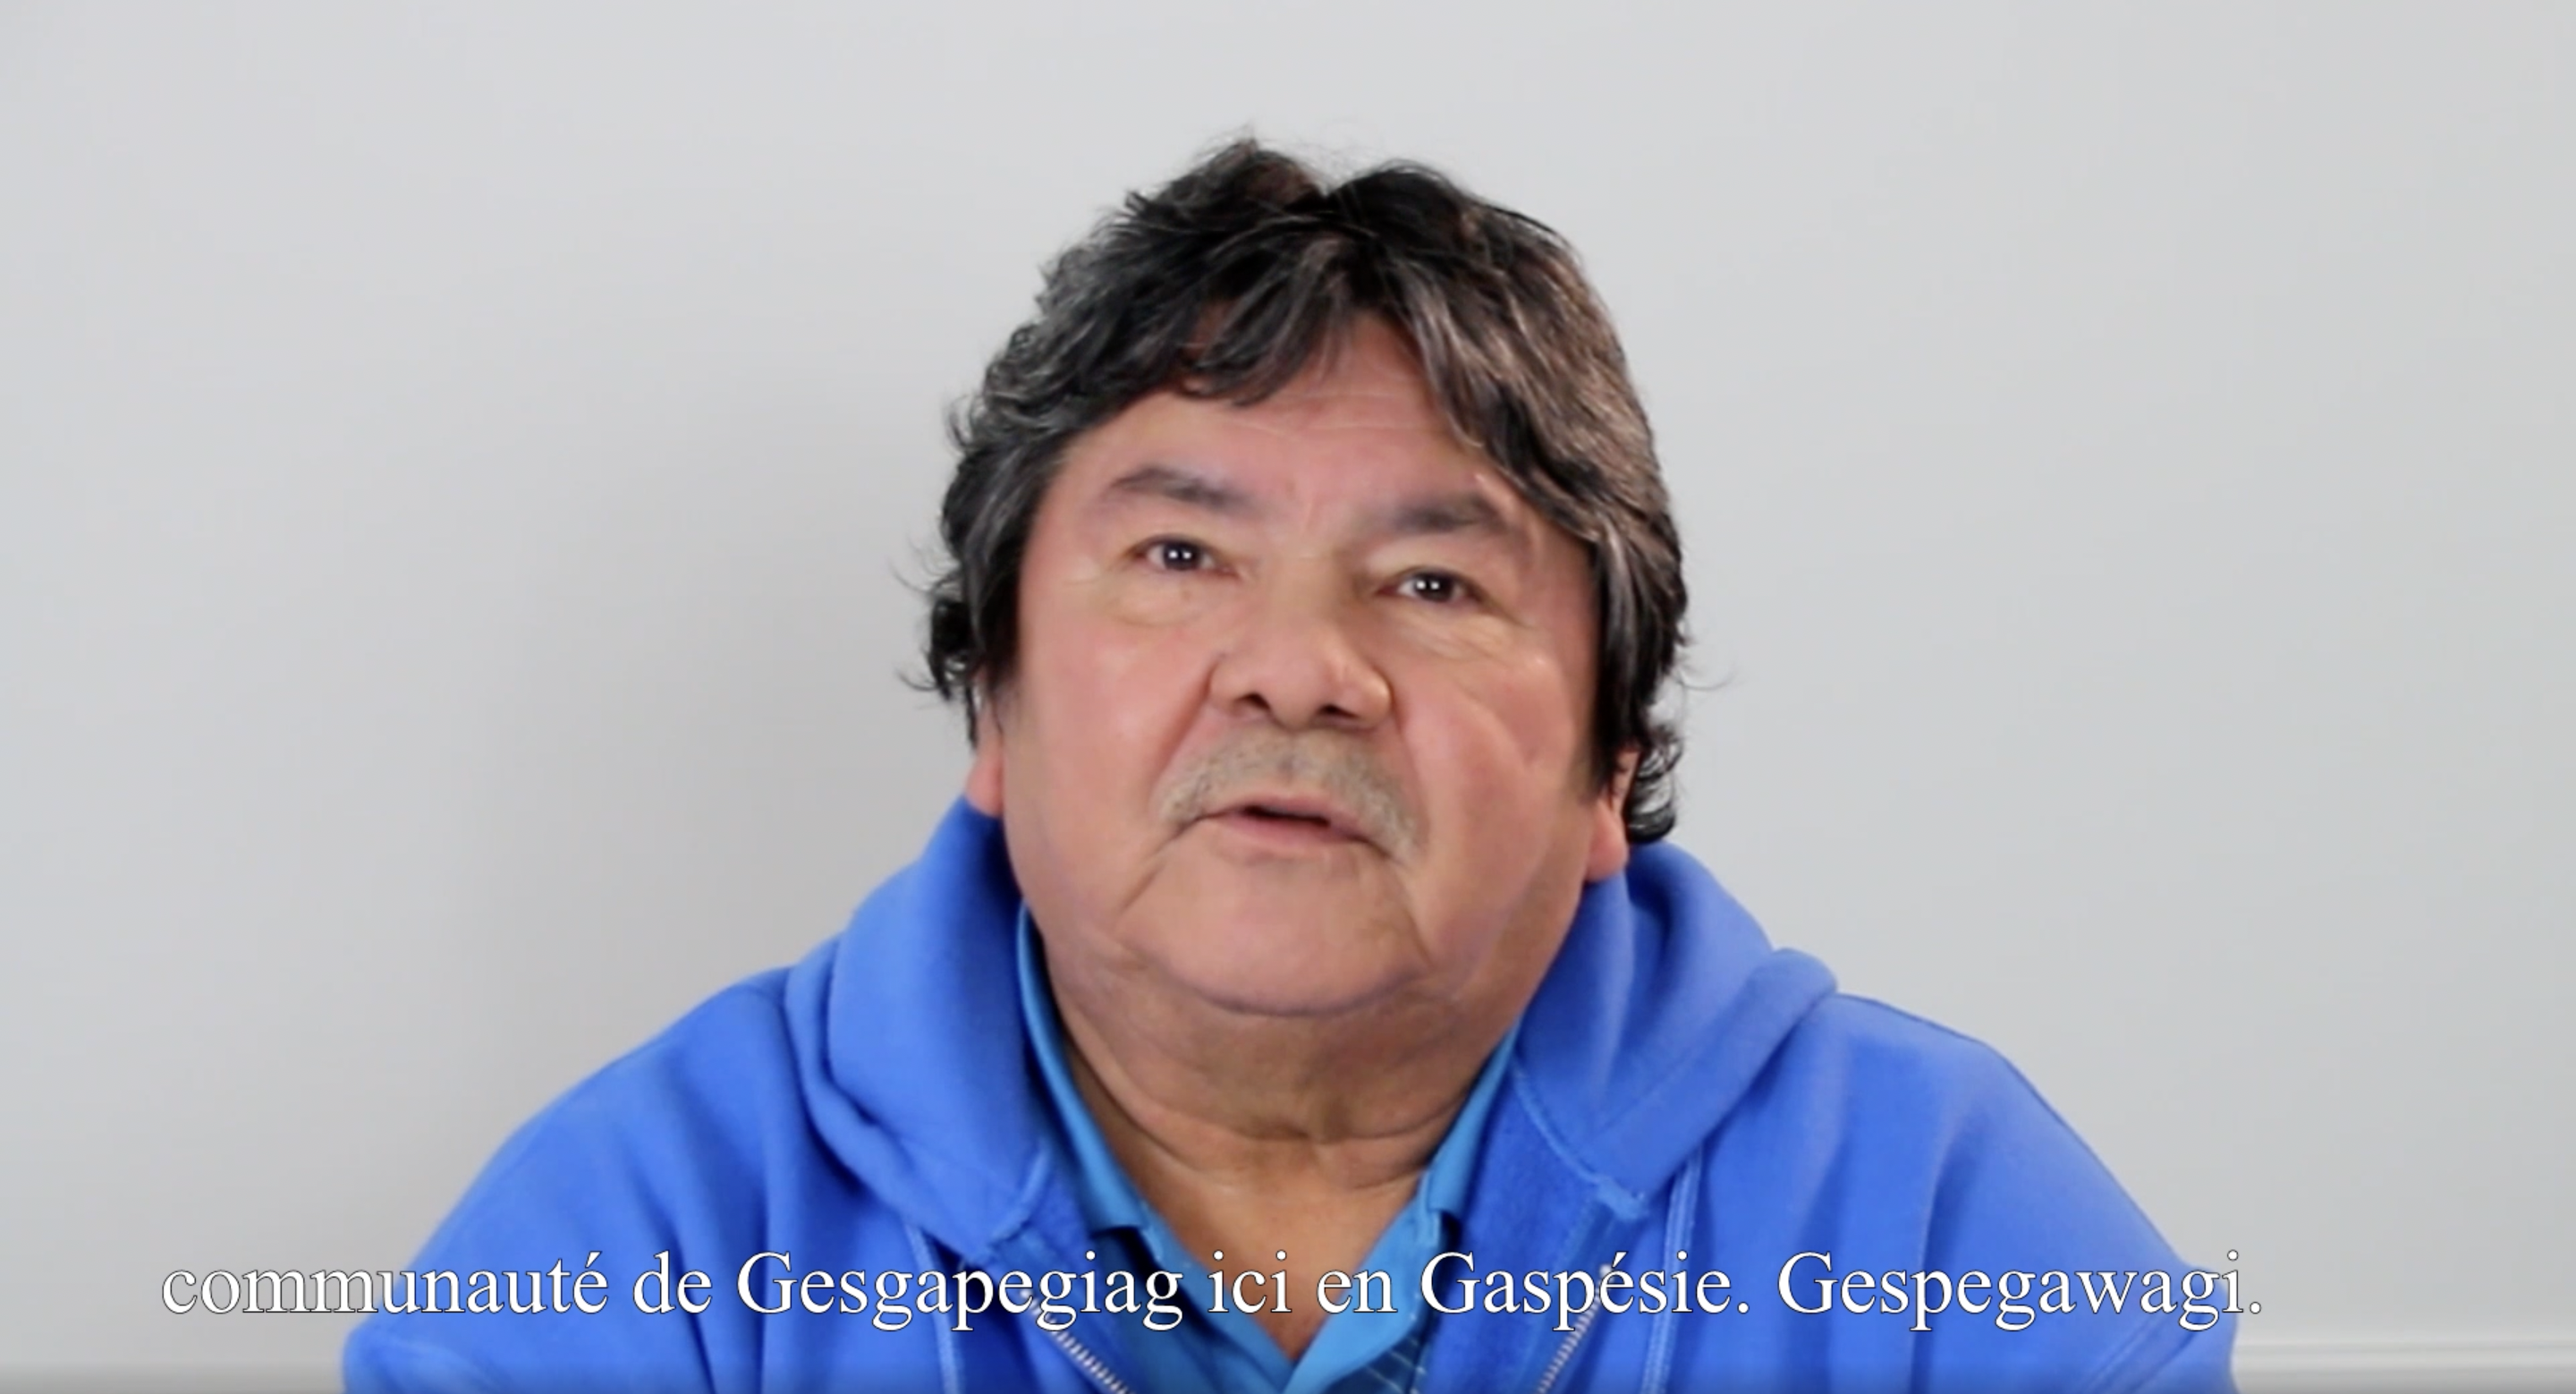 Our Gaspesian Heritage Ep 8 of 8: Sharing Mi'kmaq Language